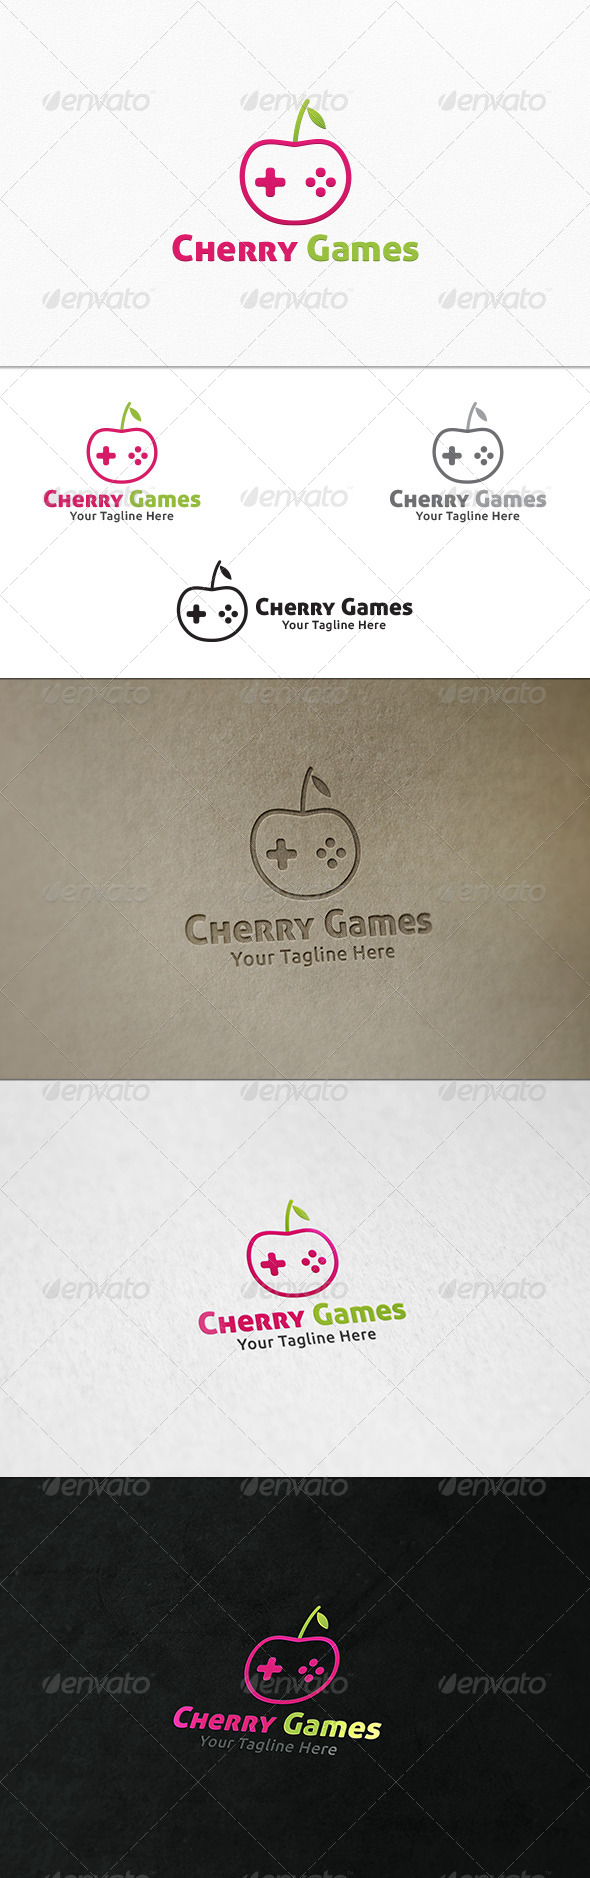 GraphicRiver Cherry Games Logo Template 7700949